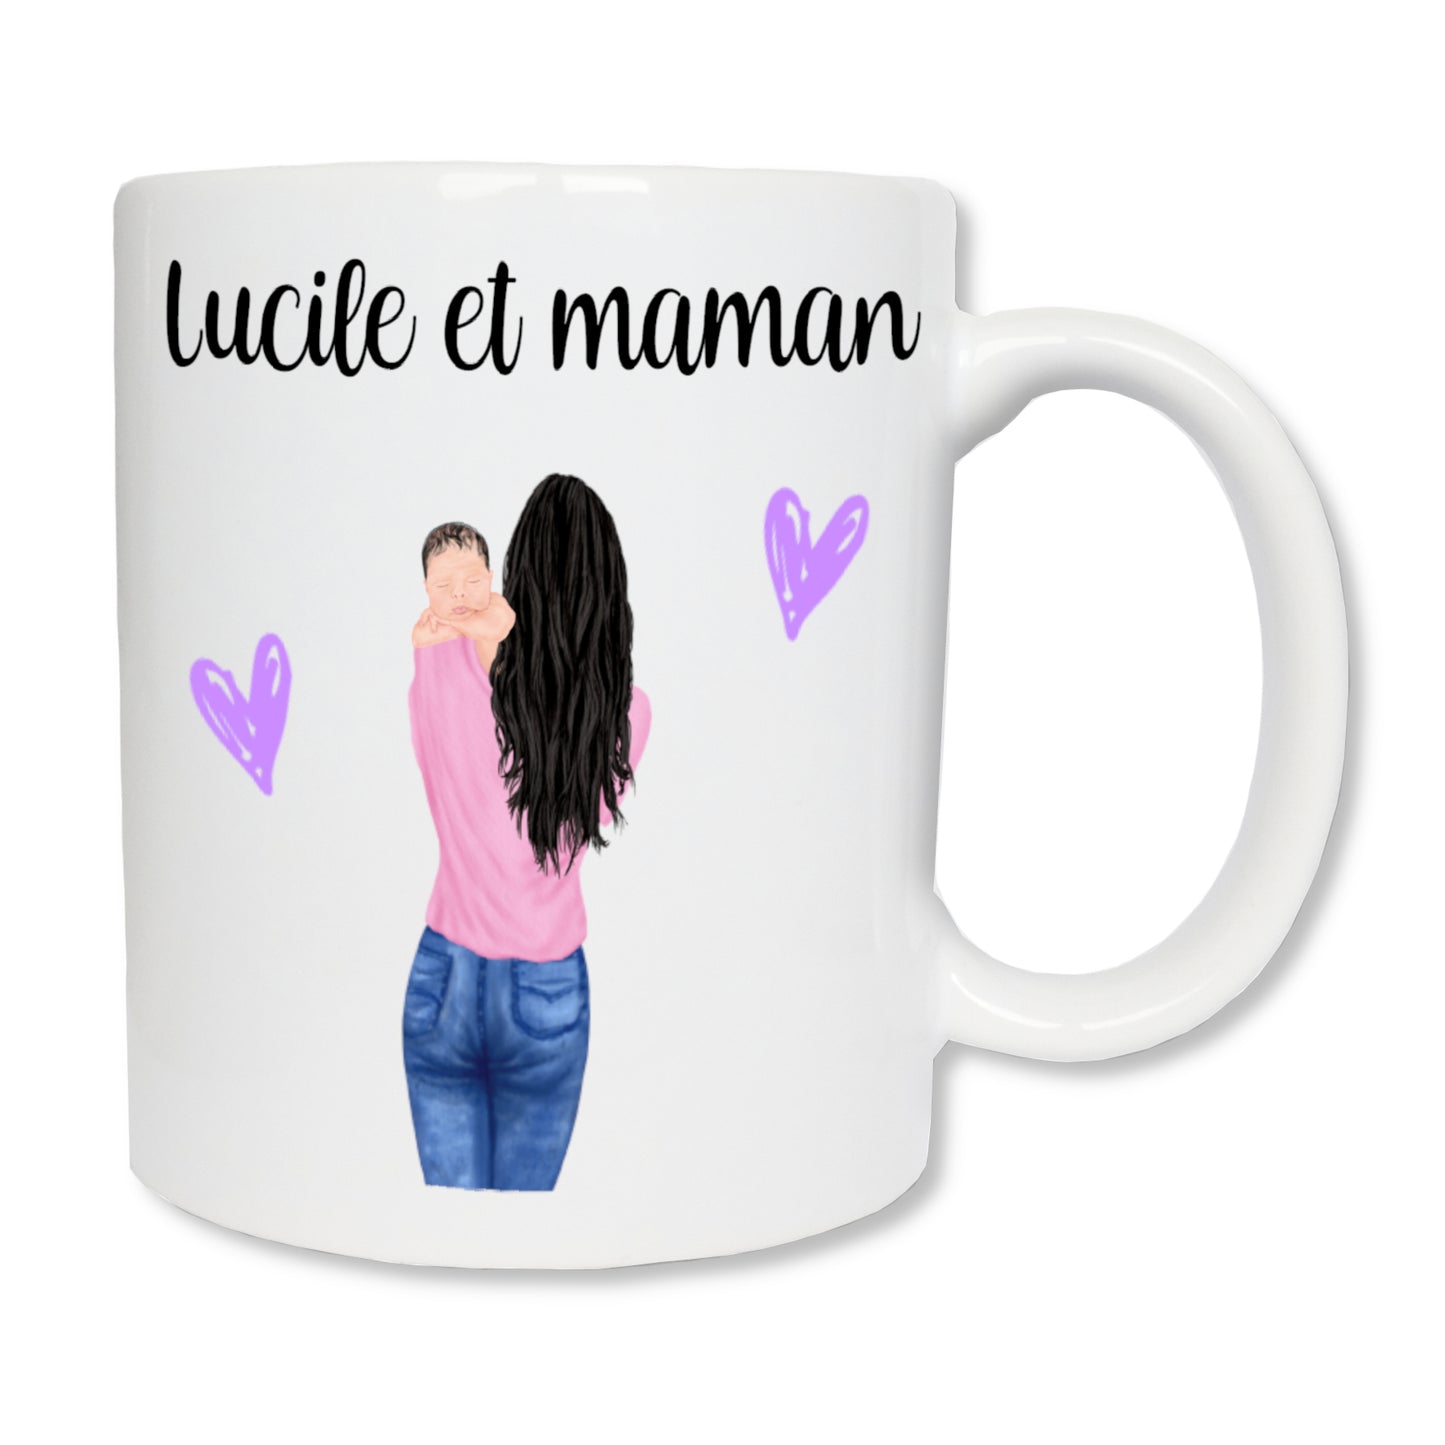 Personalized mom and baby mug